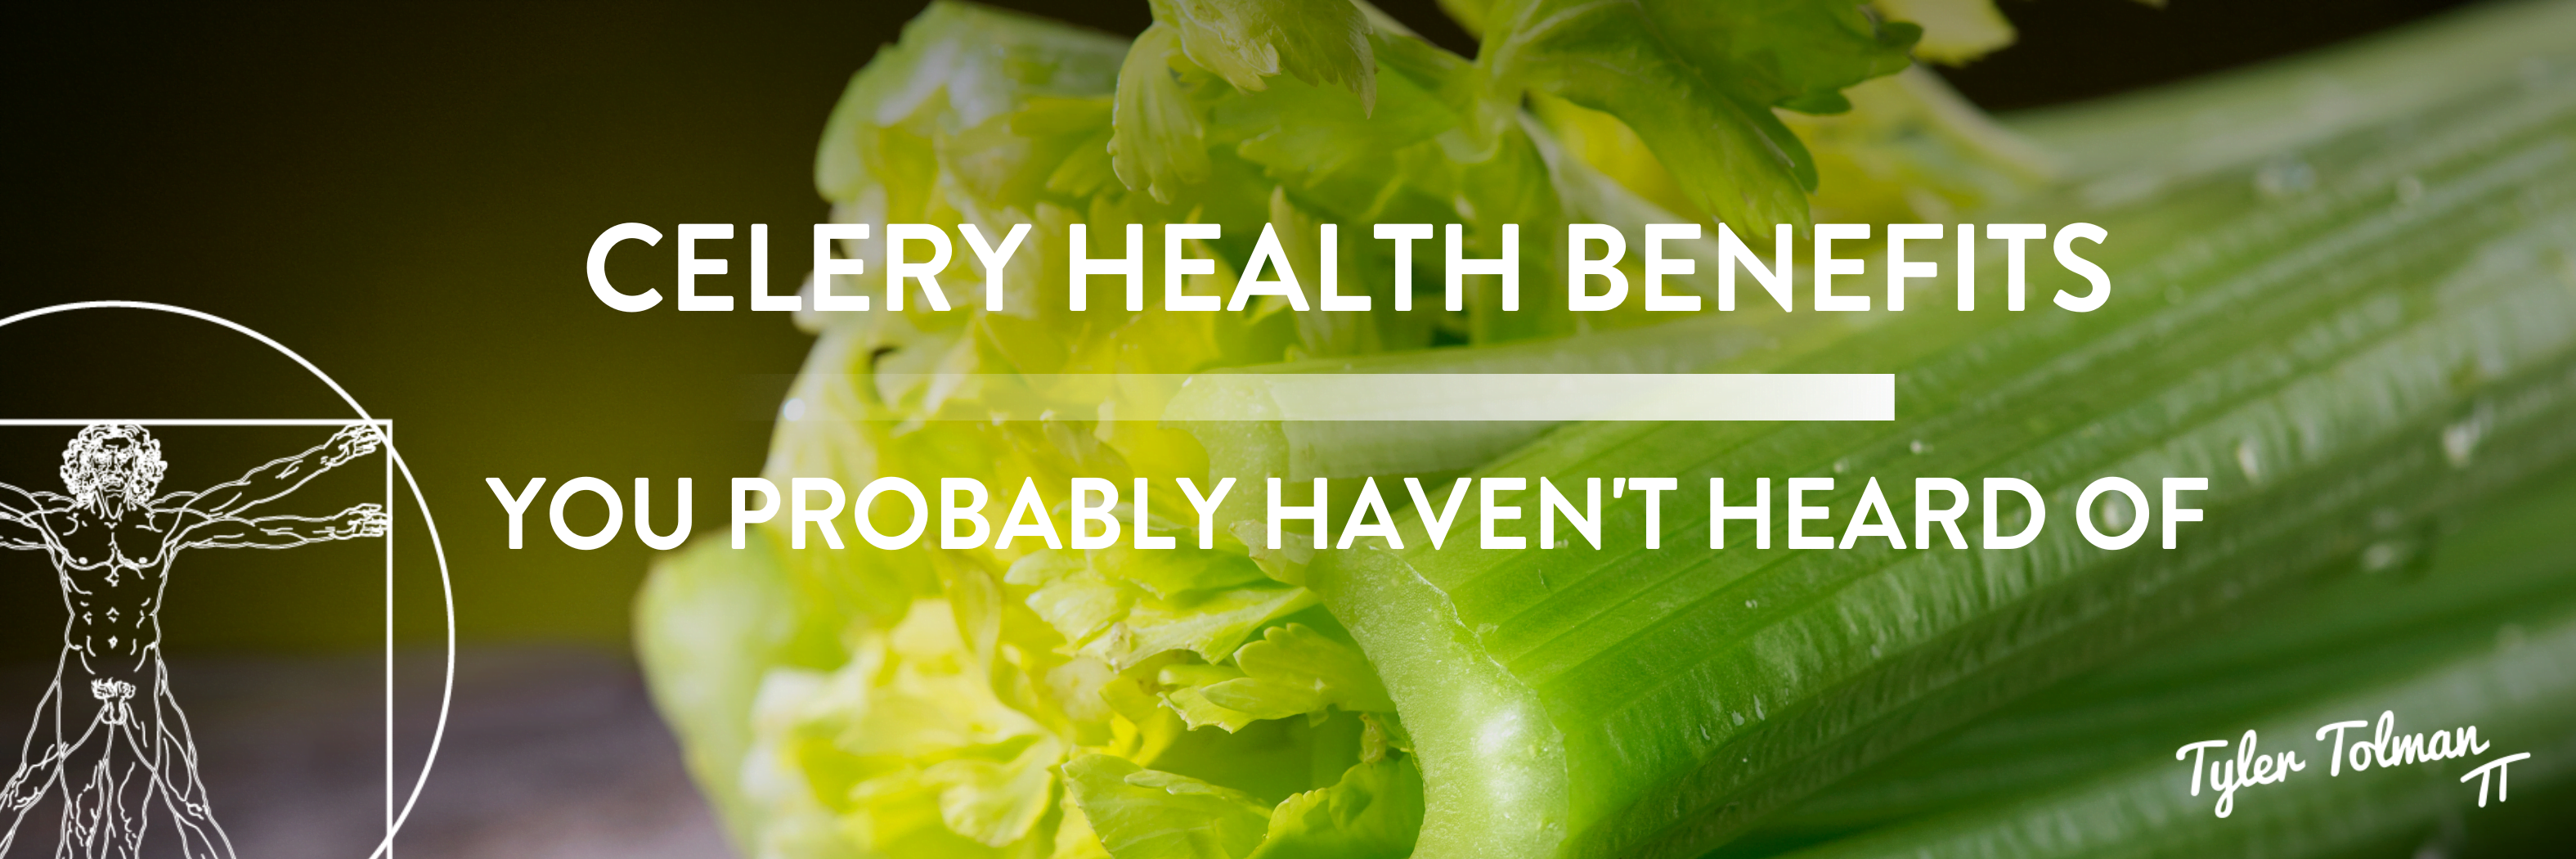 celery health benefits